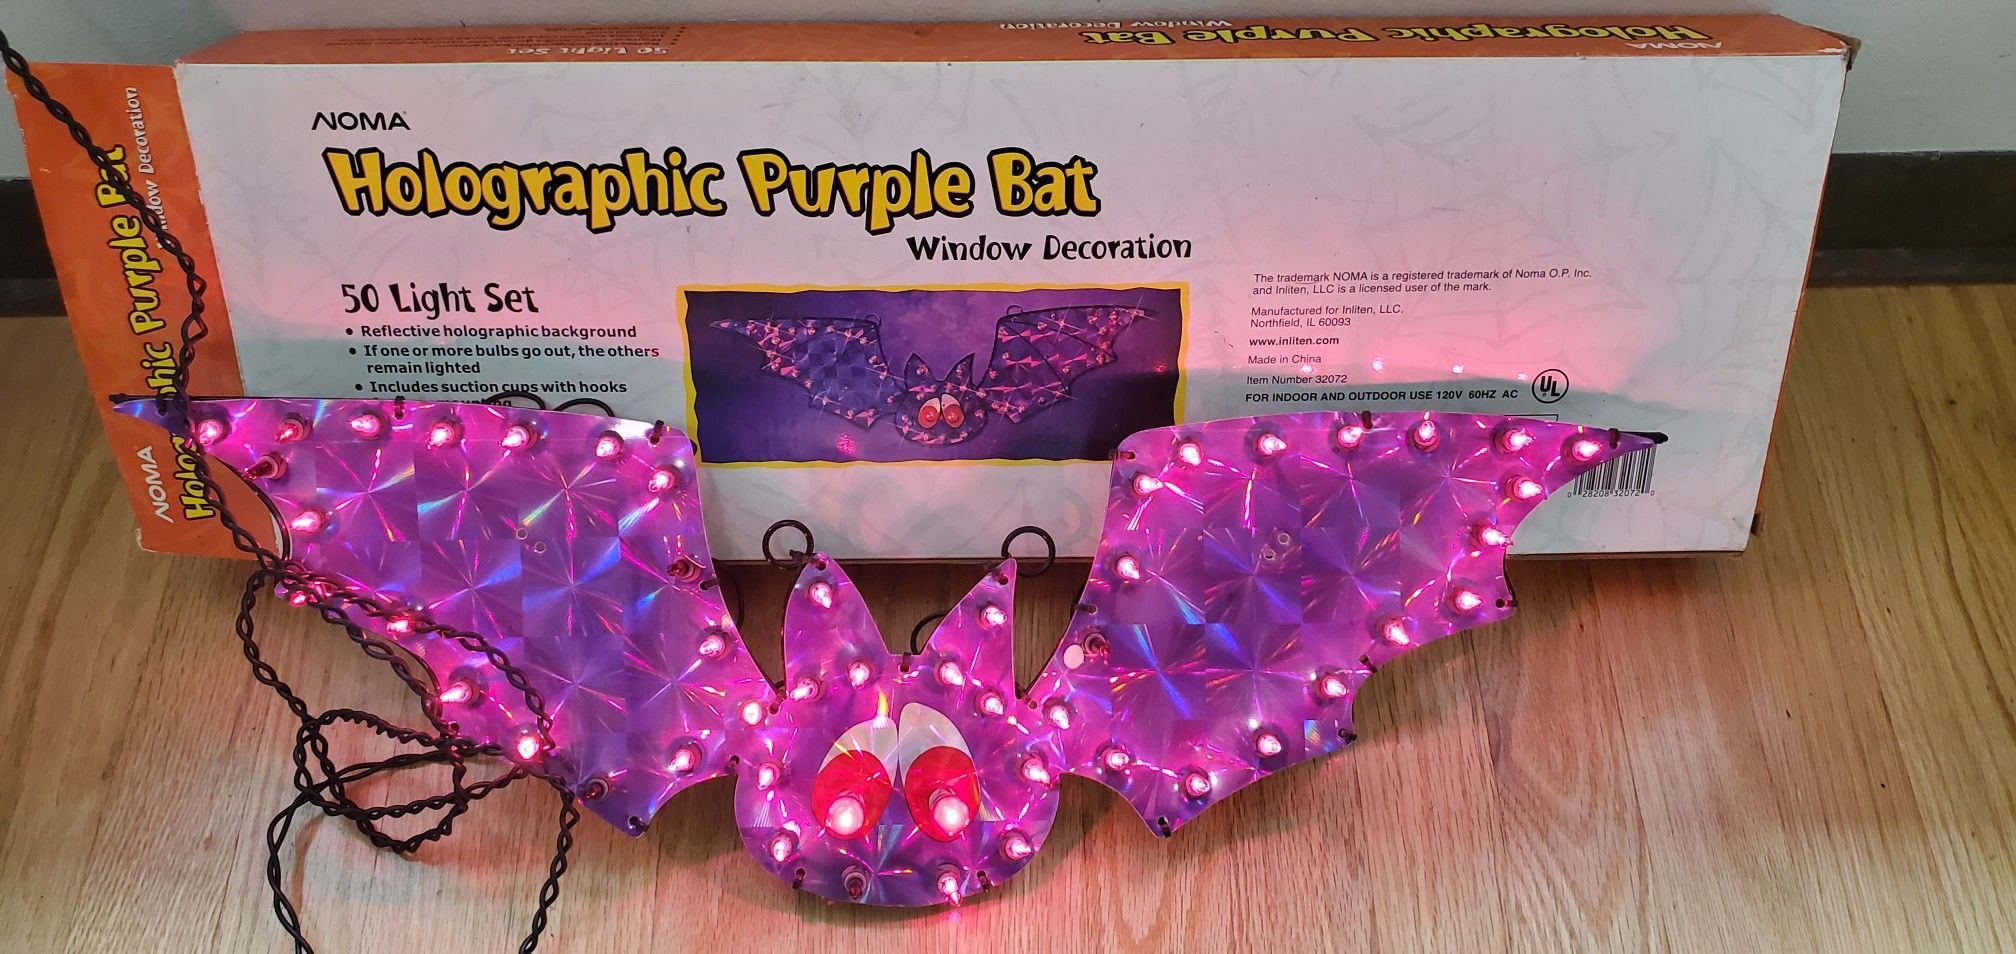 Noma Holographic Halloween Purple Bat With 50 Lights Window Decor